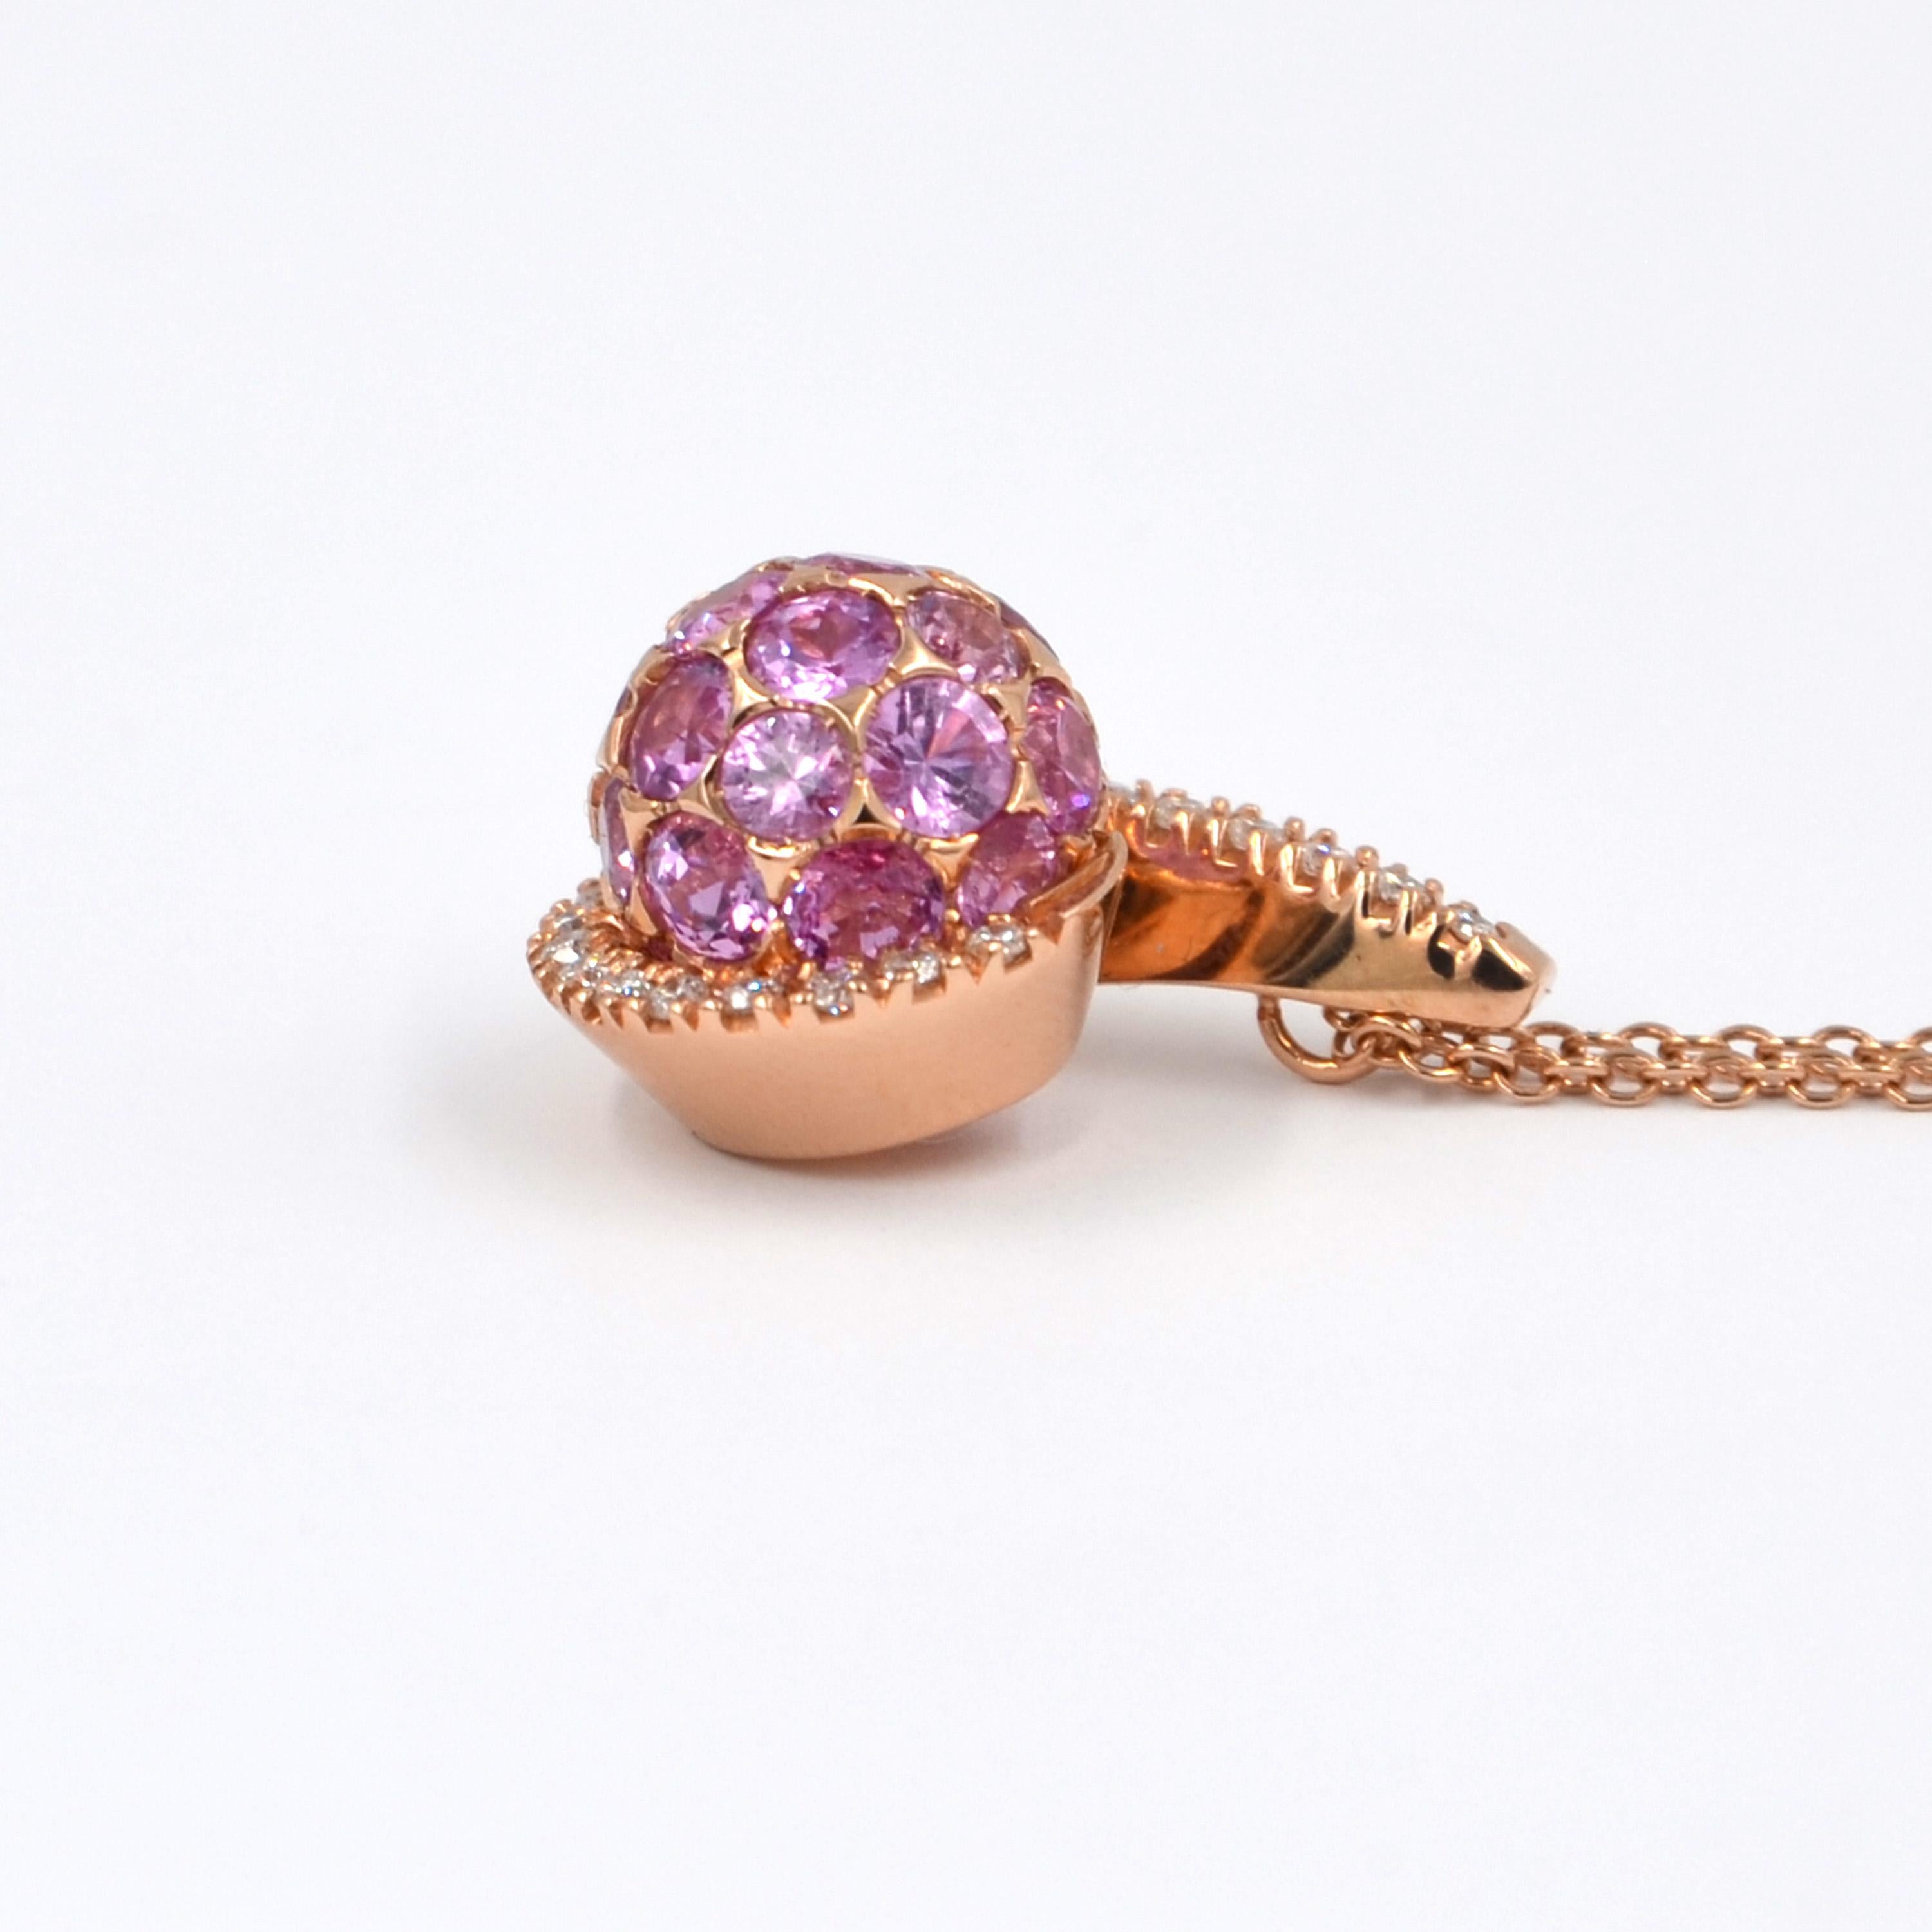 18 kt Rose Gold Pink Sapphires White Diamonds Garavelli Ball Pendant with Chain.
Chain Length cm 45 with a loop at cm 40
Ball diameter mm 12
18kt ROSE GOLD gr : 11.10
WHITE DIAMONDS ct : 0.36
PINK SAPPHIRES ct : 4.54